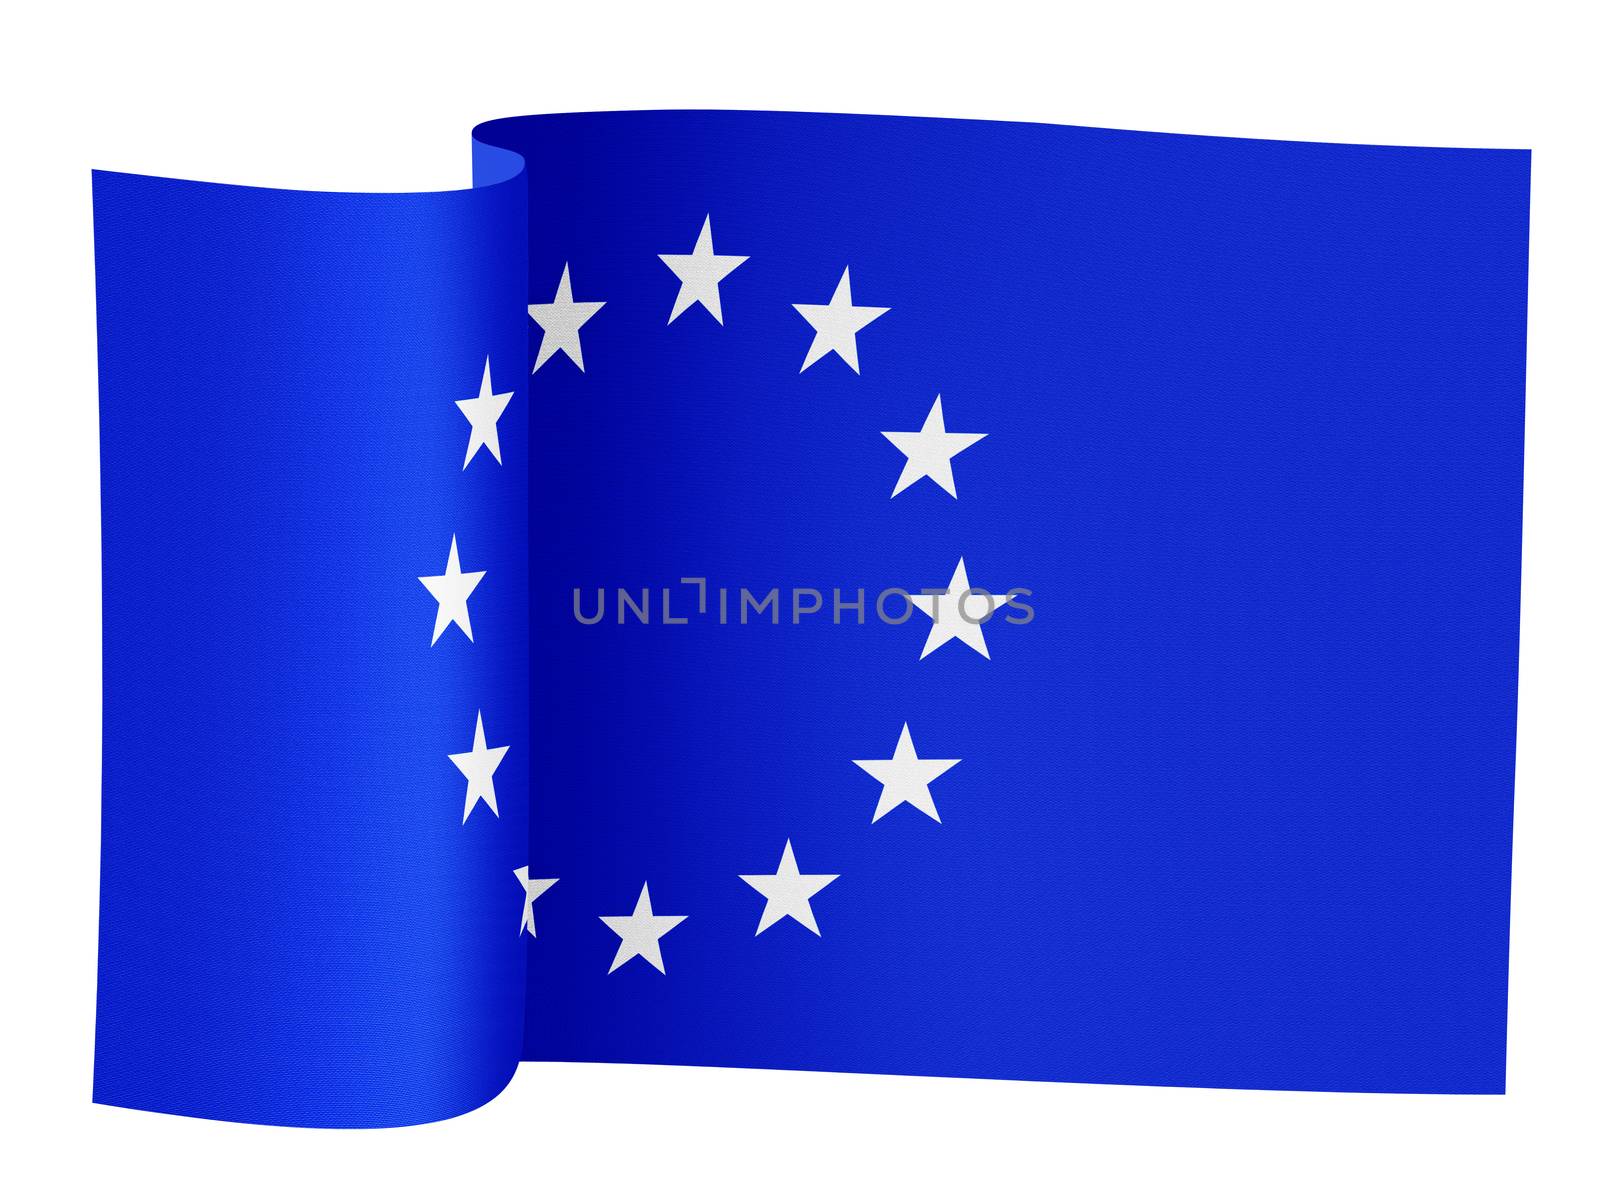 illustration of the European Union flag on a white background